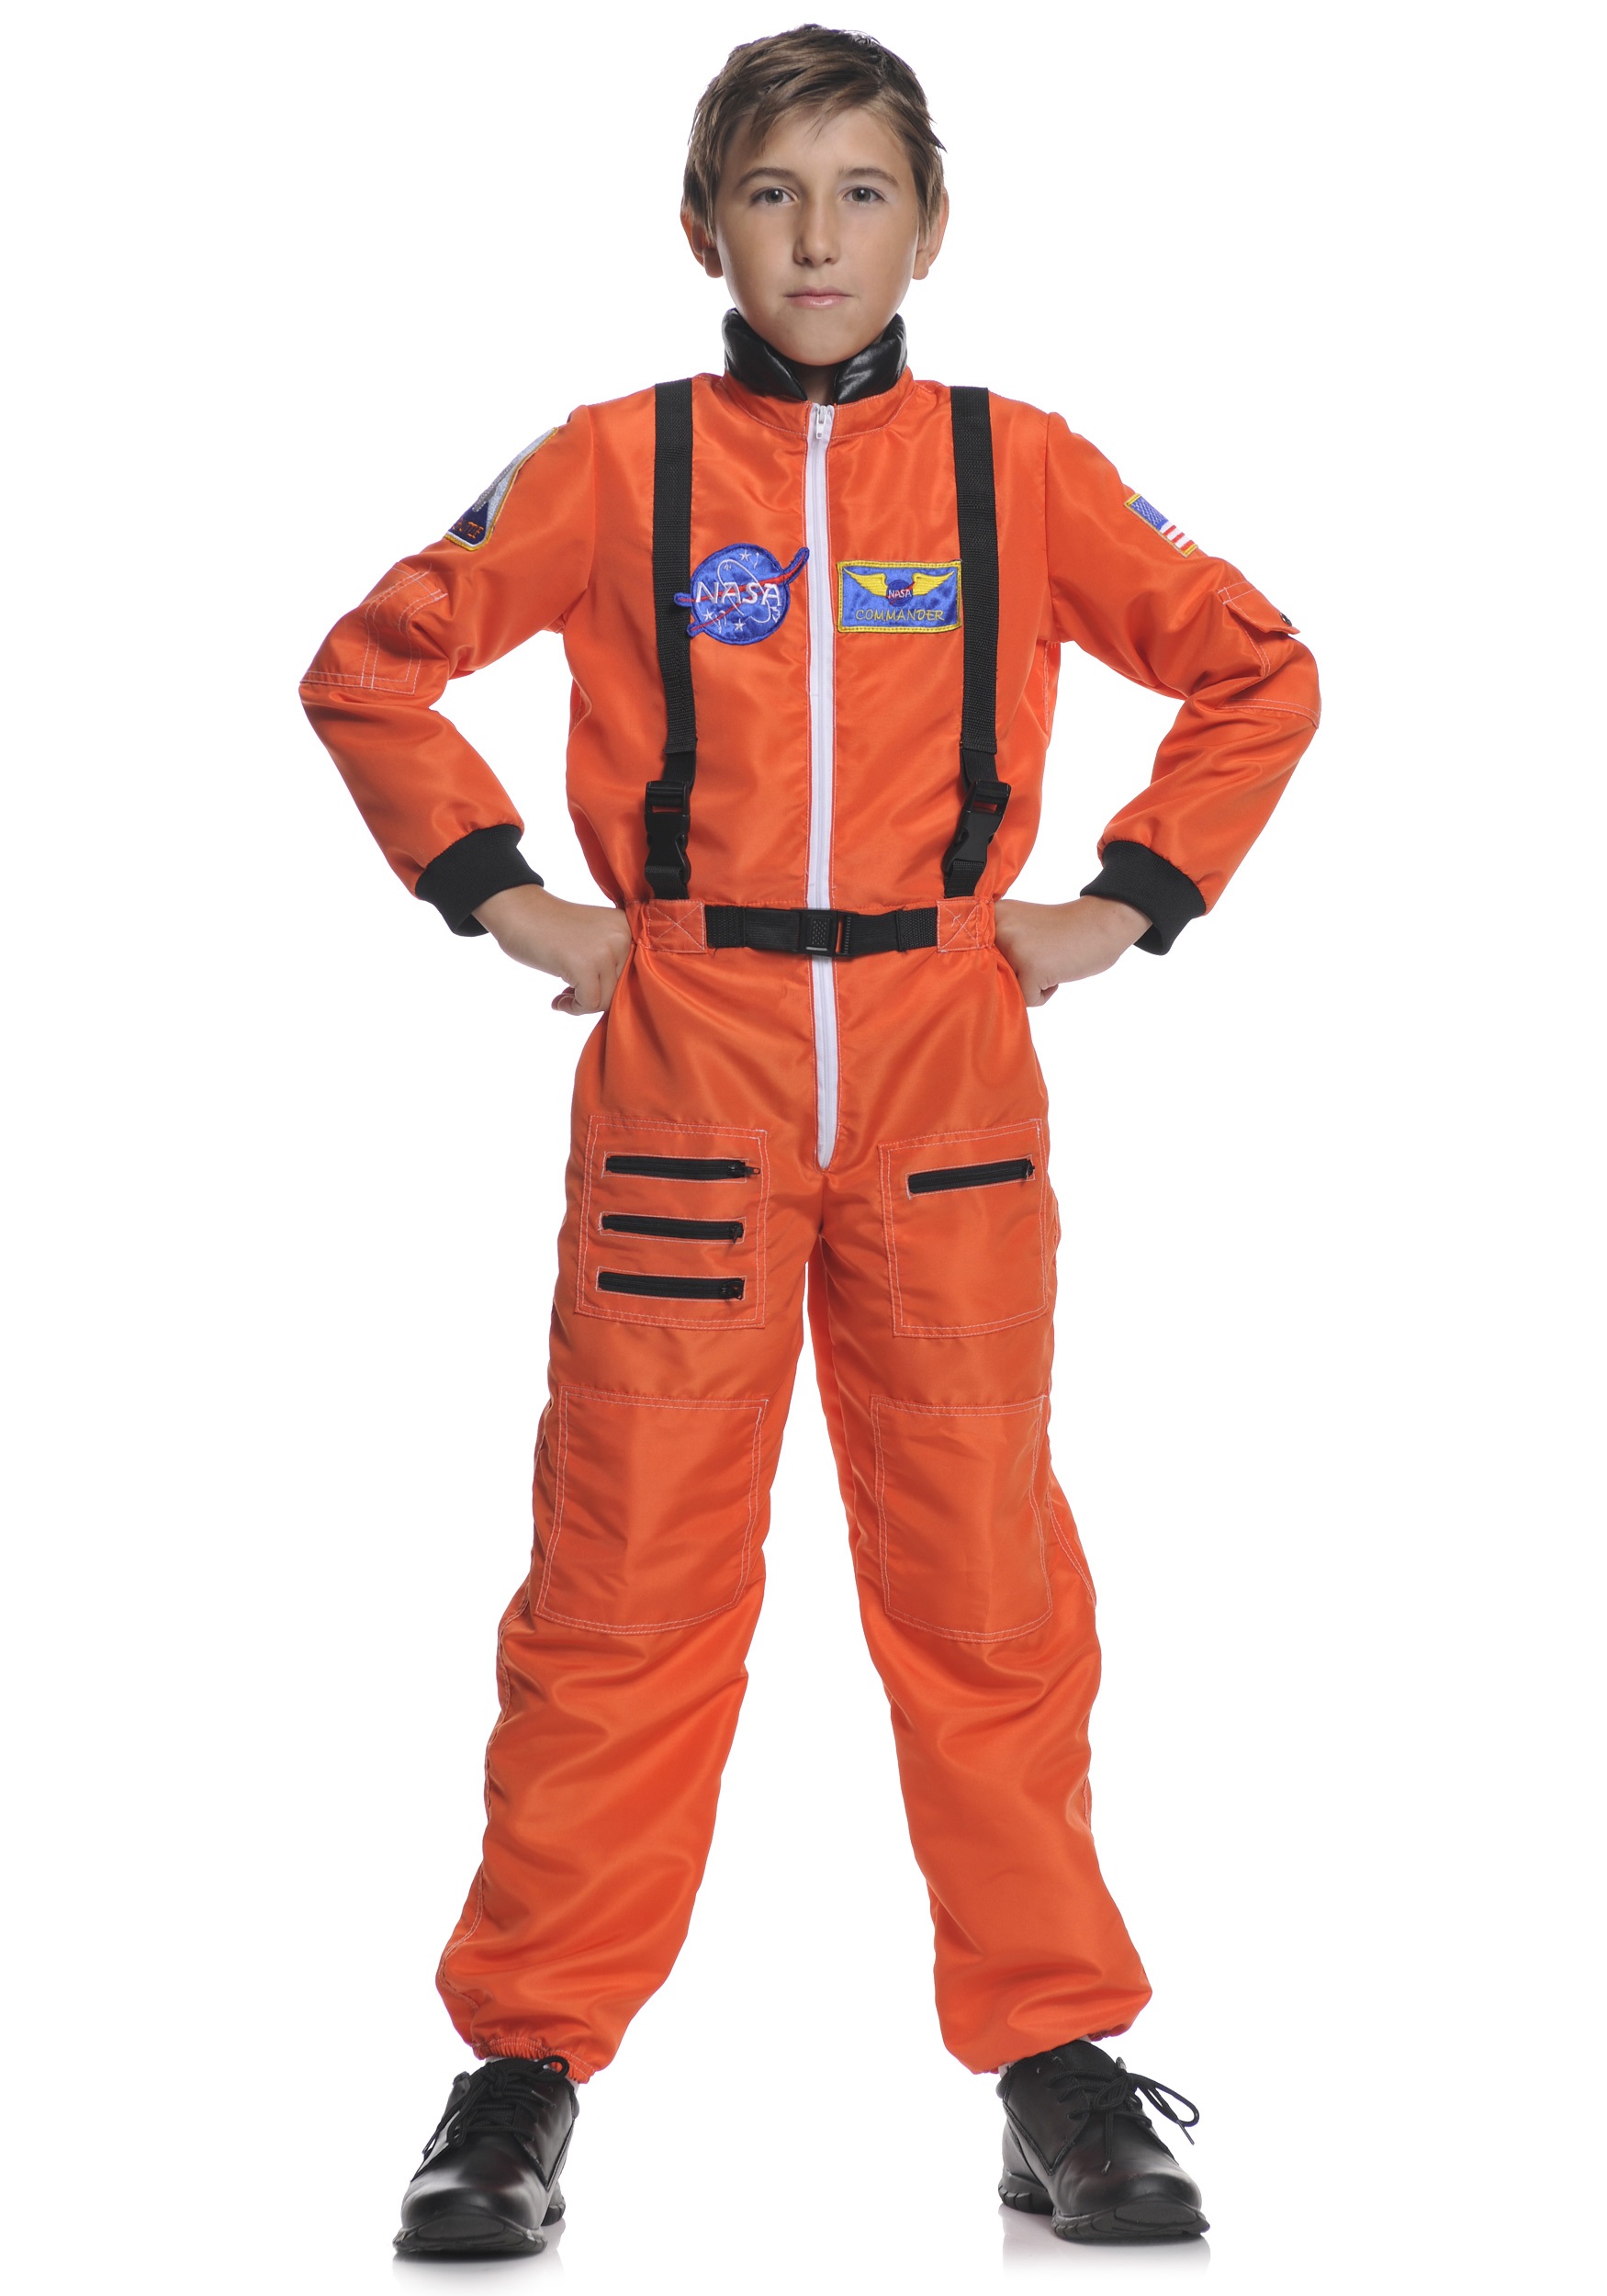 Kid’s Orange Astronaut Costume